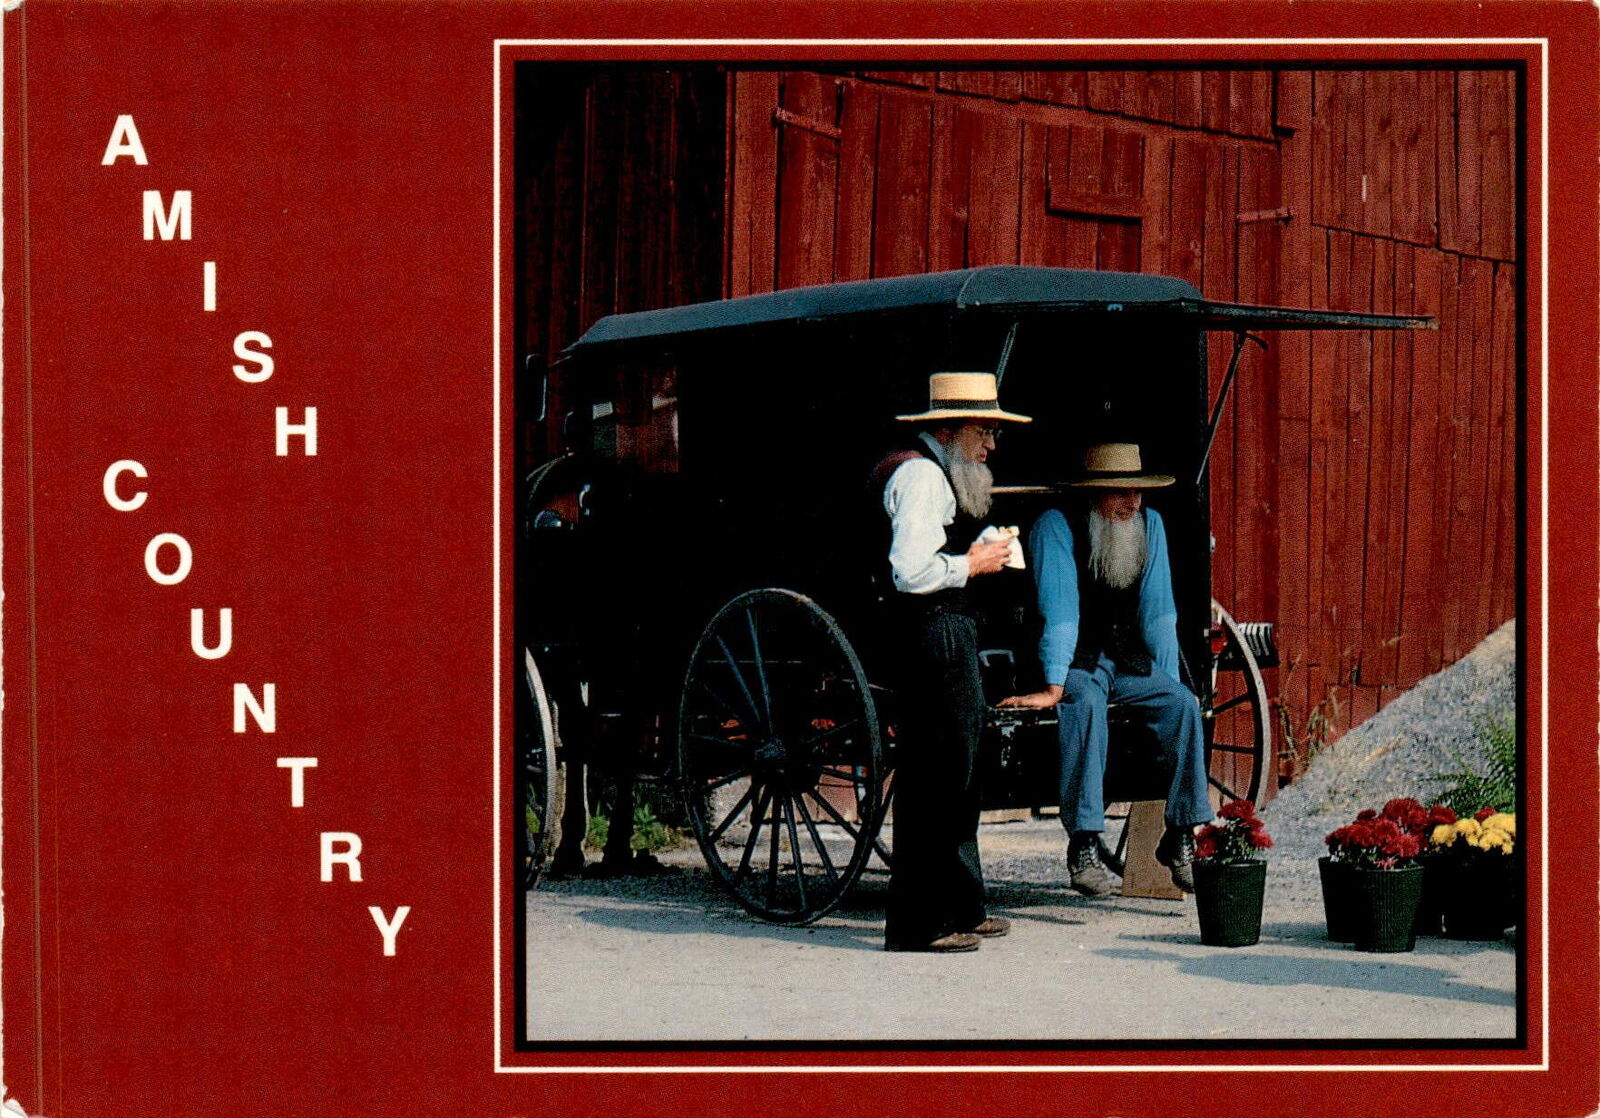 Amish countryside, gentlemen, flowers, auction, vibrant colors, rural l postcard